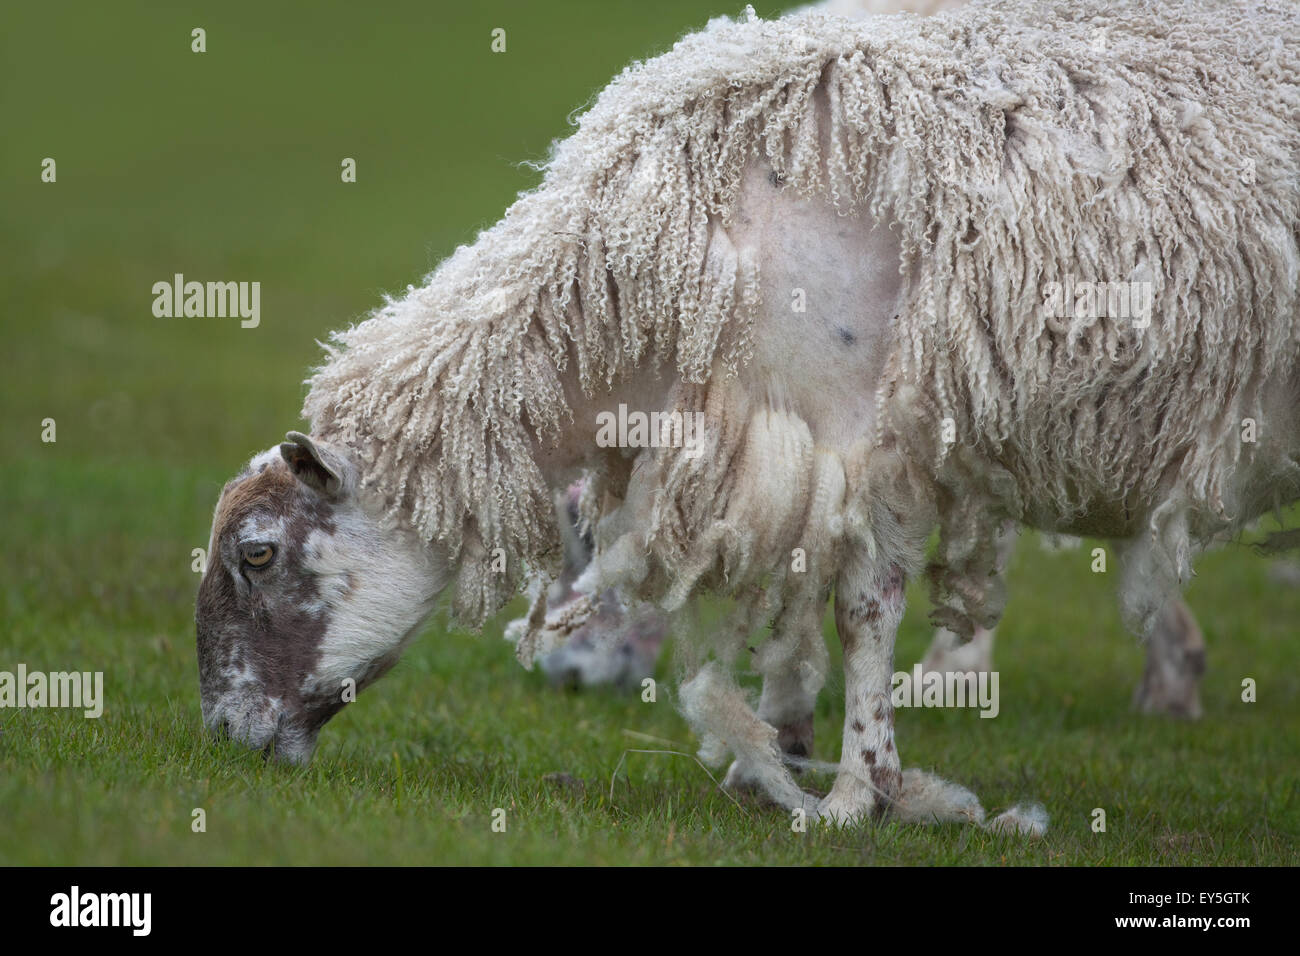 Ovejas. Pastoreo; Mula oveja. Derramando la lana natural. Si no esquilados, lana es muda. De mayo. Iona. Escocia. Foto de stock